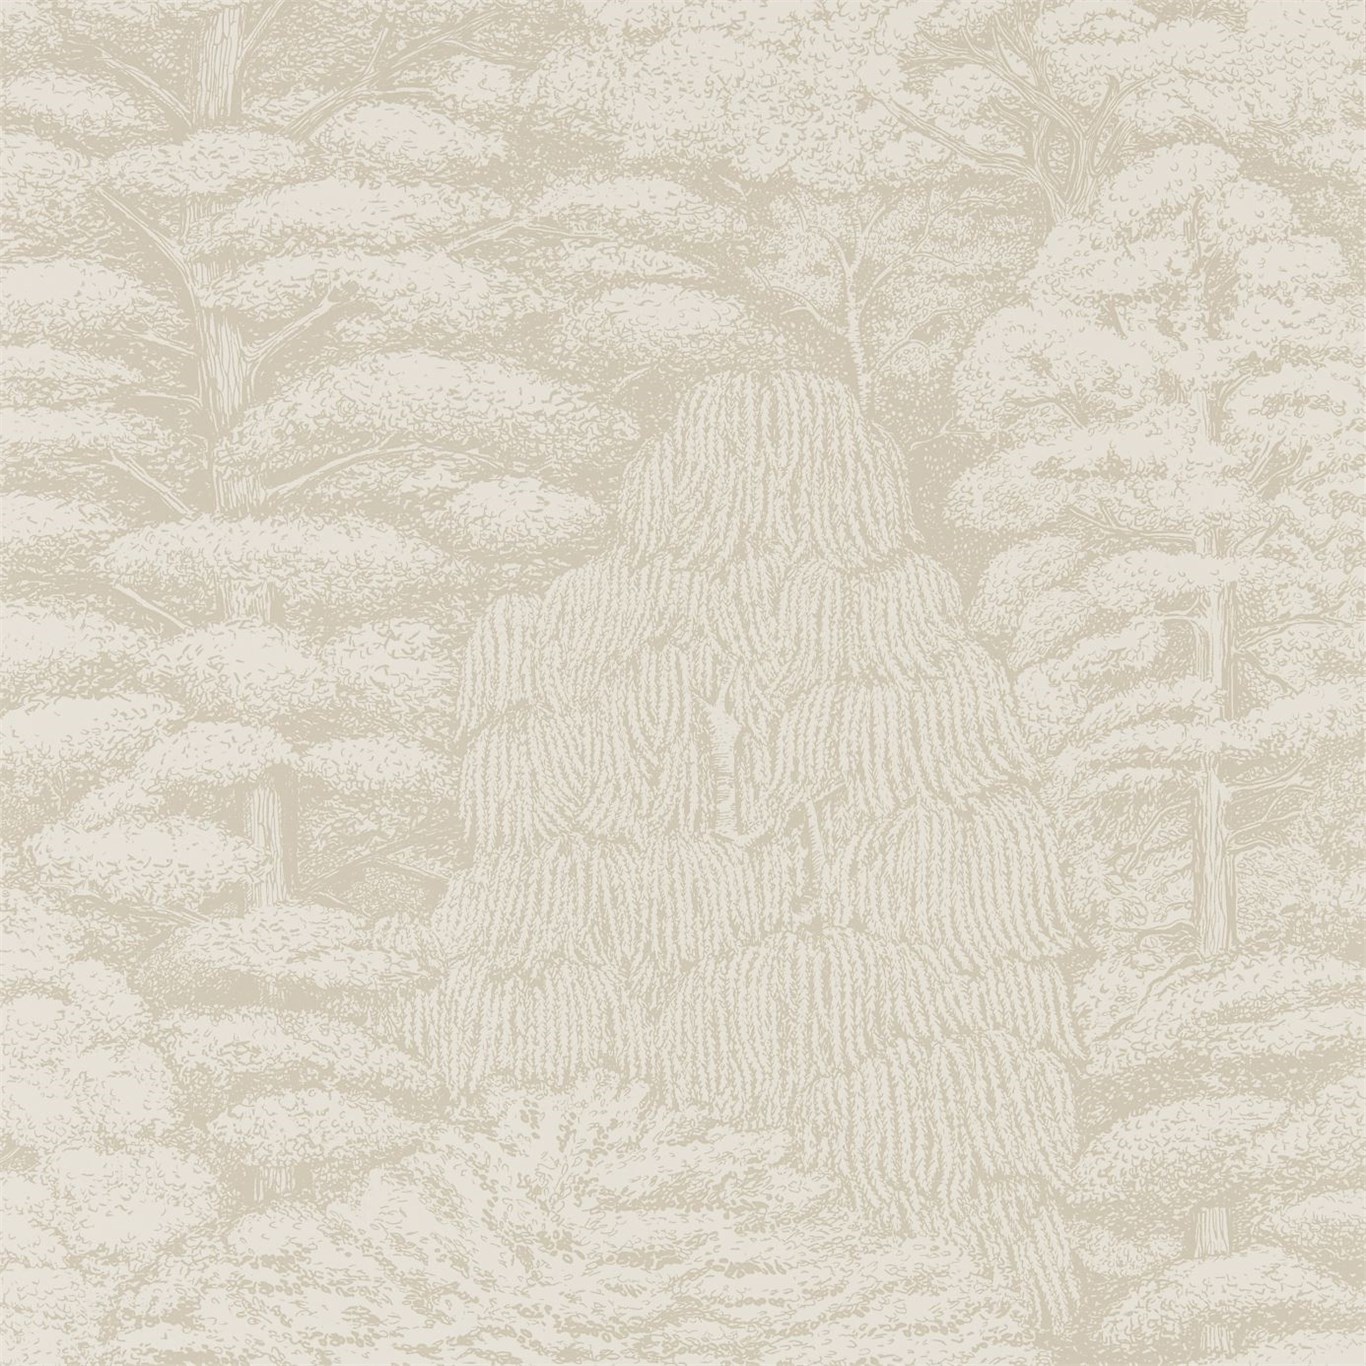 Wallpaper - Sanderson Woodland Walk Wallpapers Woodland Toile Ivory/Neutral